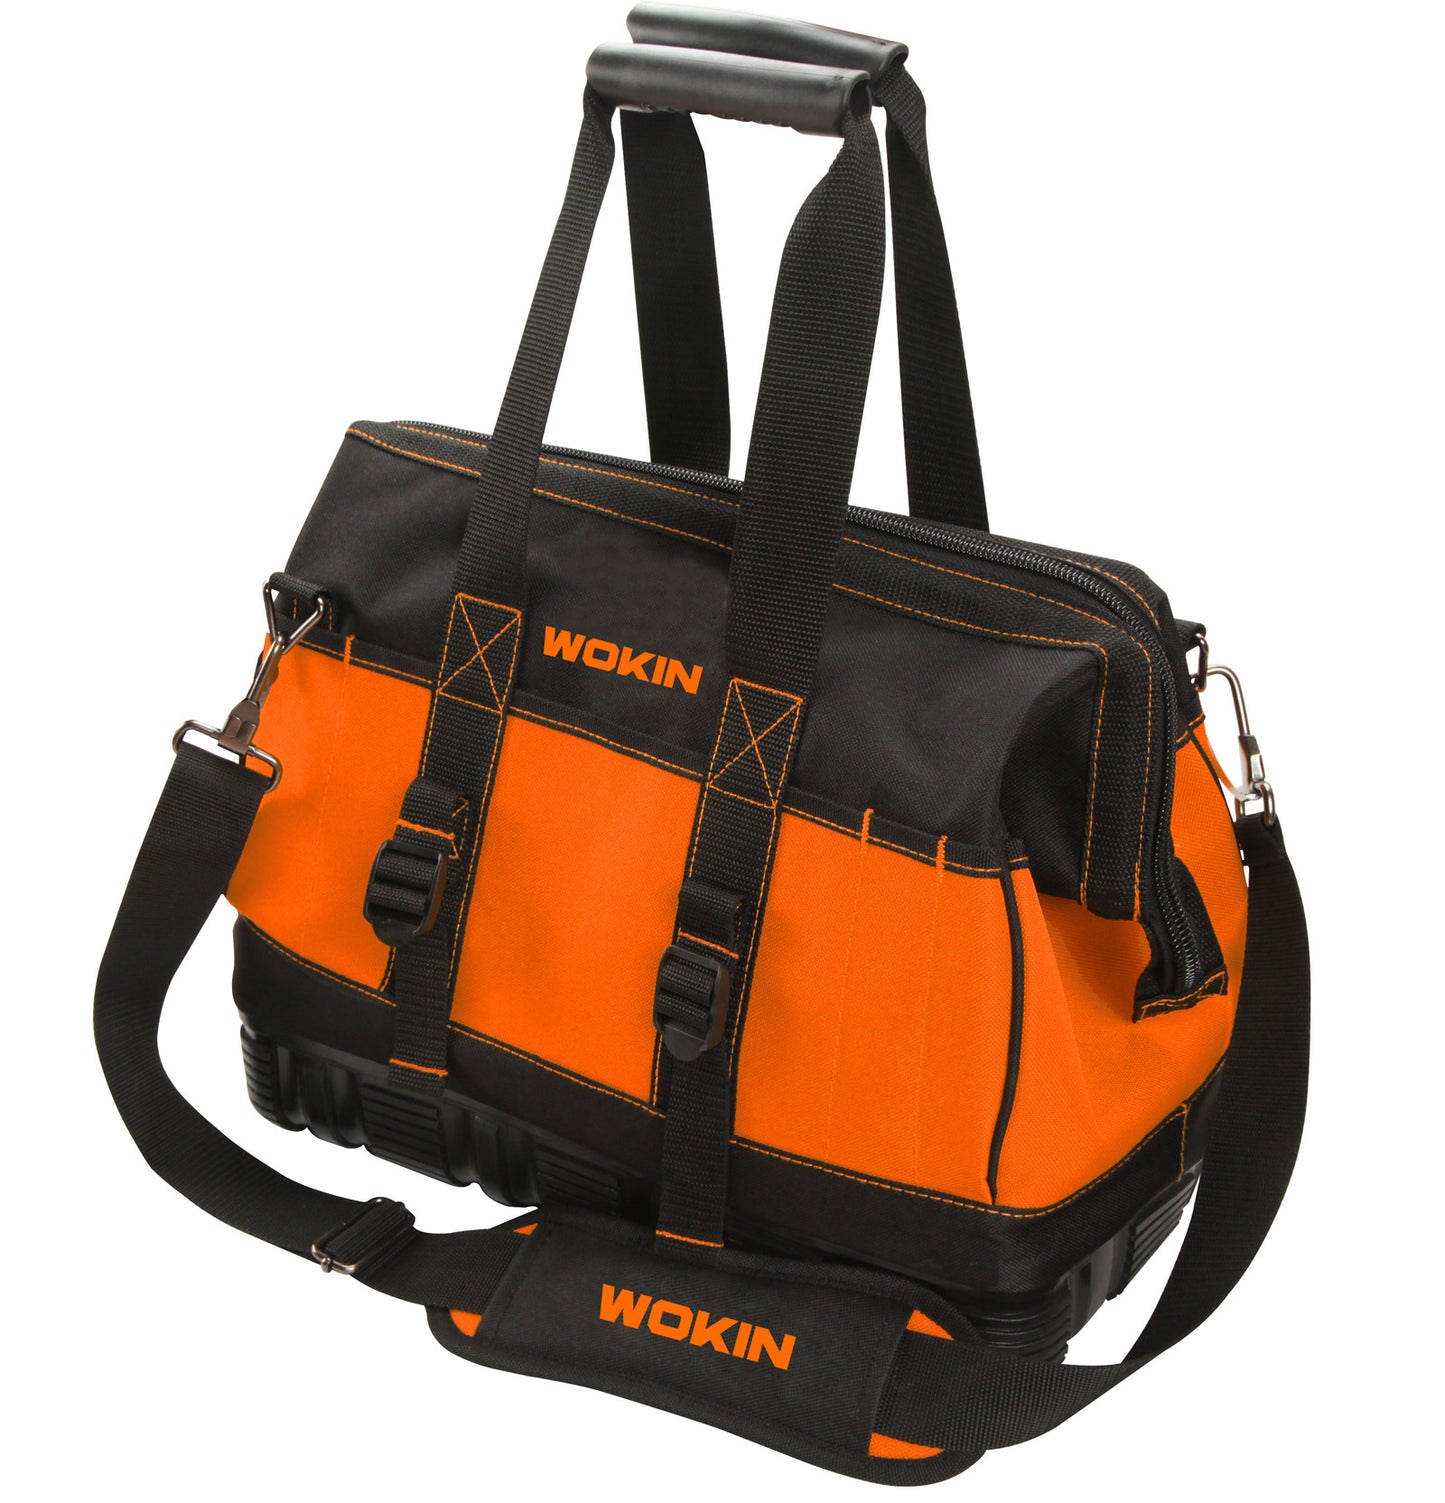 Wokin 16 Inch Tool Bag